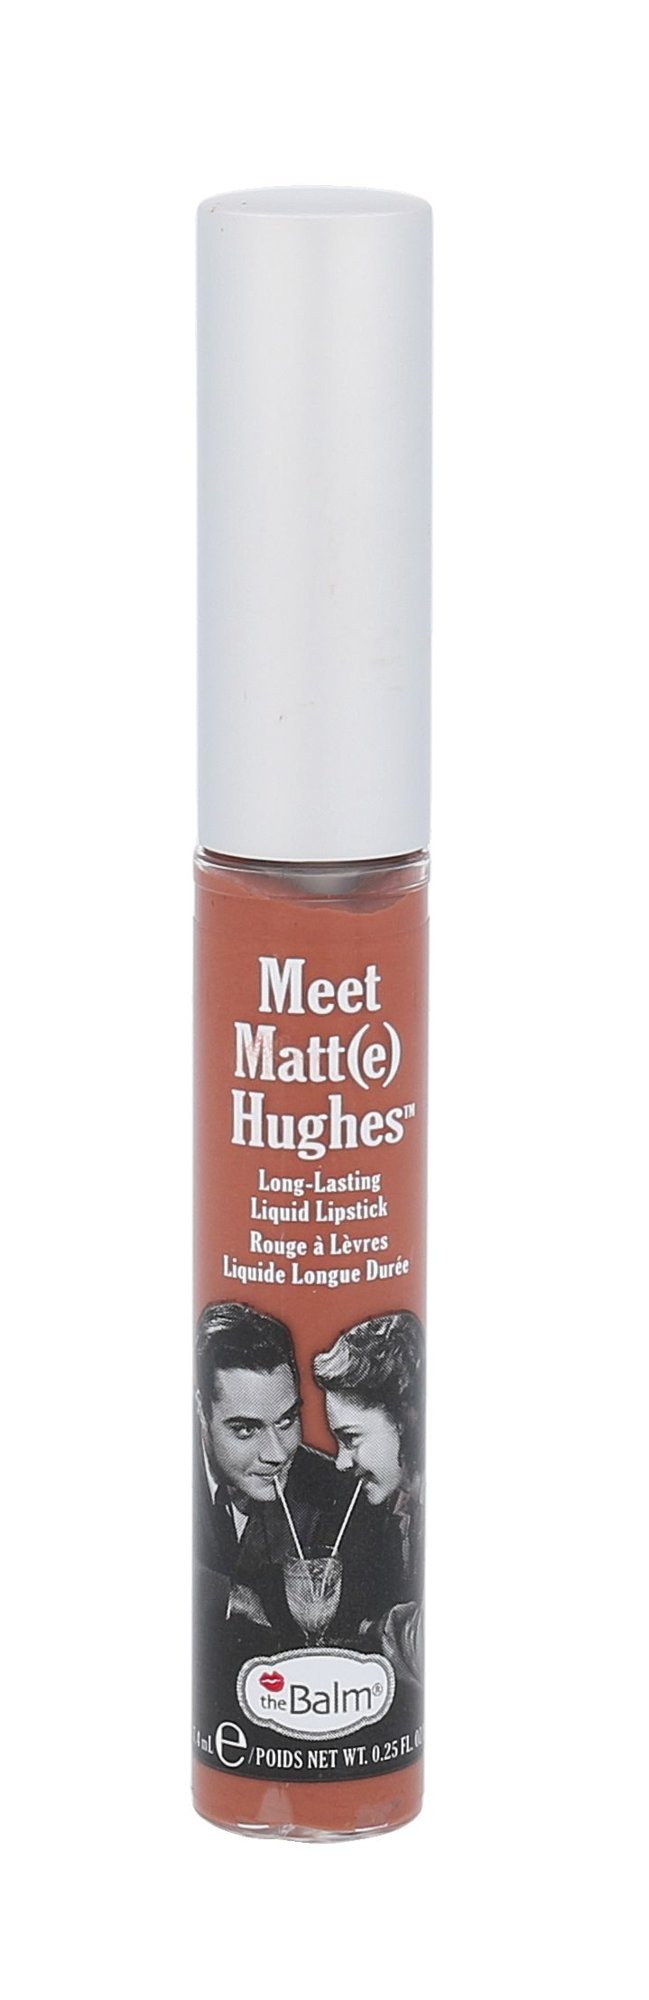 TheBalm Meet Matt(e) Hughes Long-Lasting Liquid Lipstick